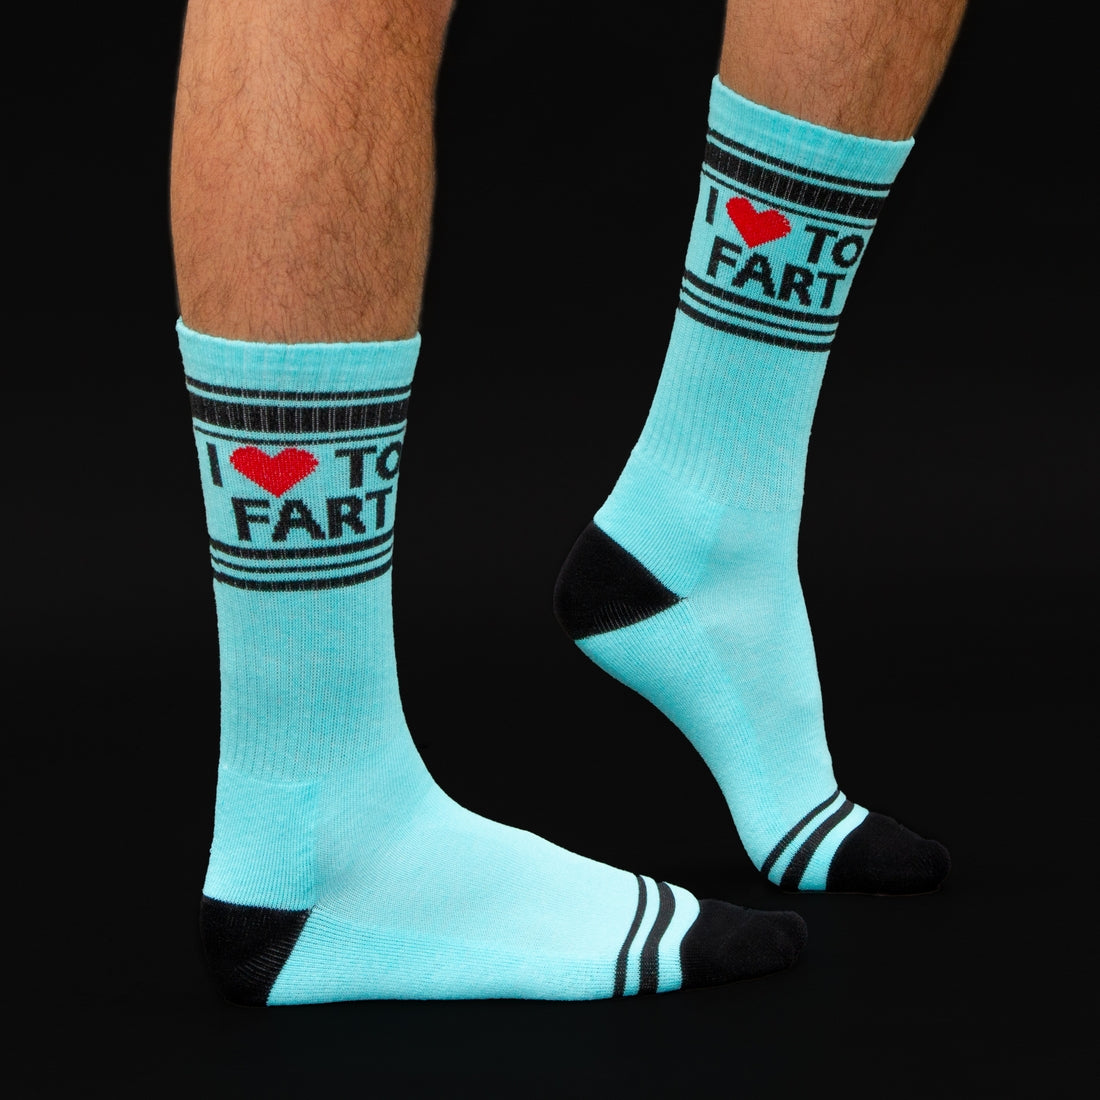 I ❤️ To Fart Socks